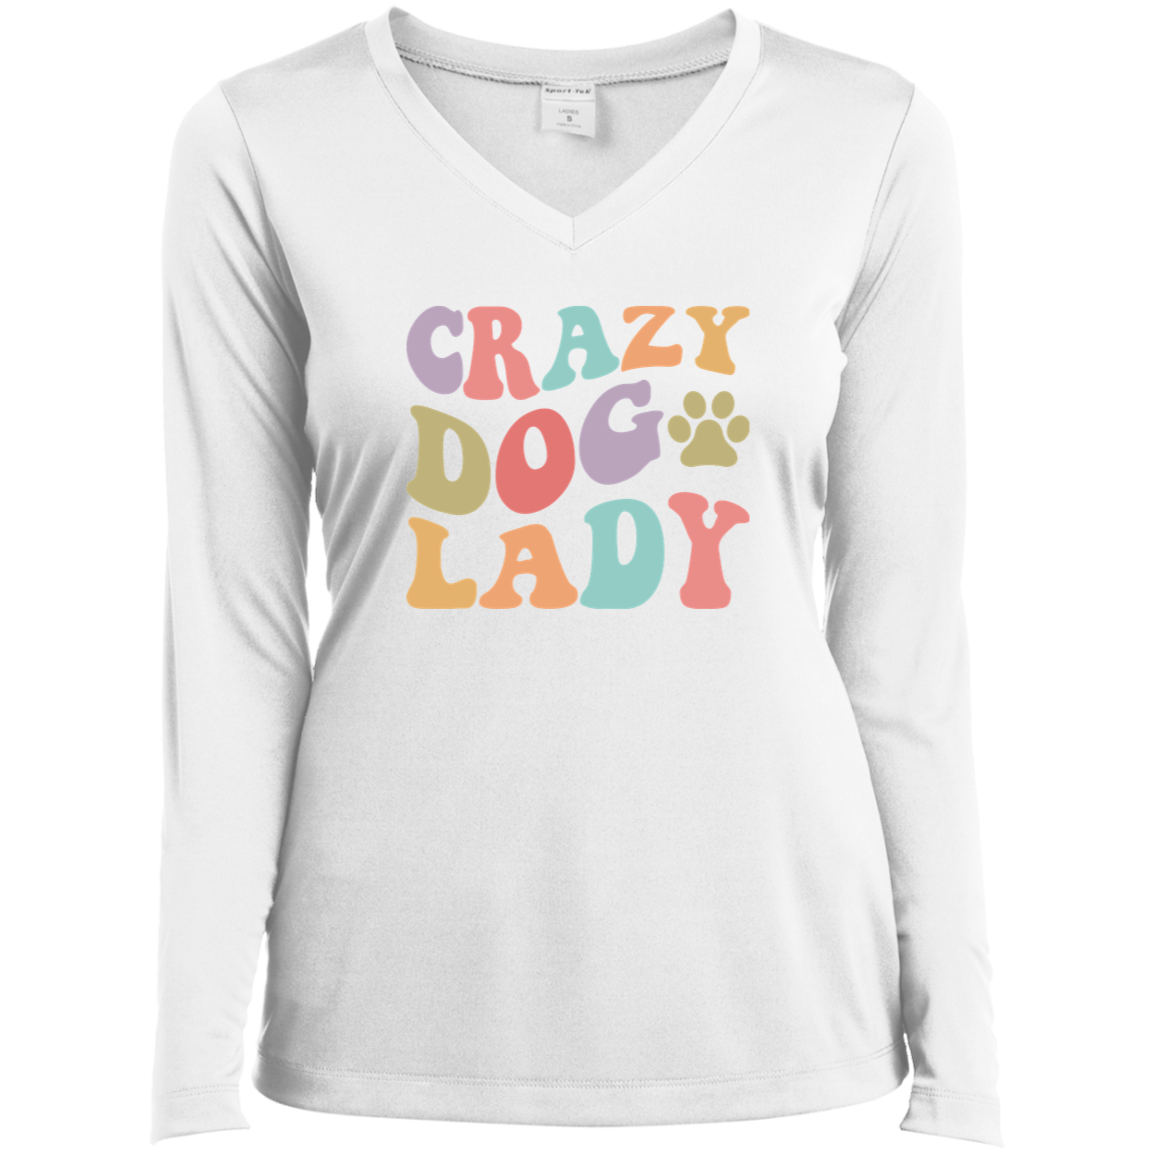 Crazy Dog Lady Rescue Ladies’ Long Sleeve Performance V-Neck Tee